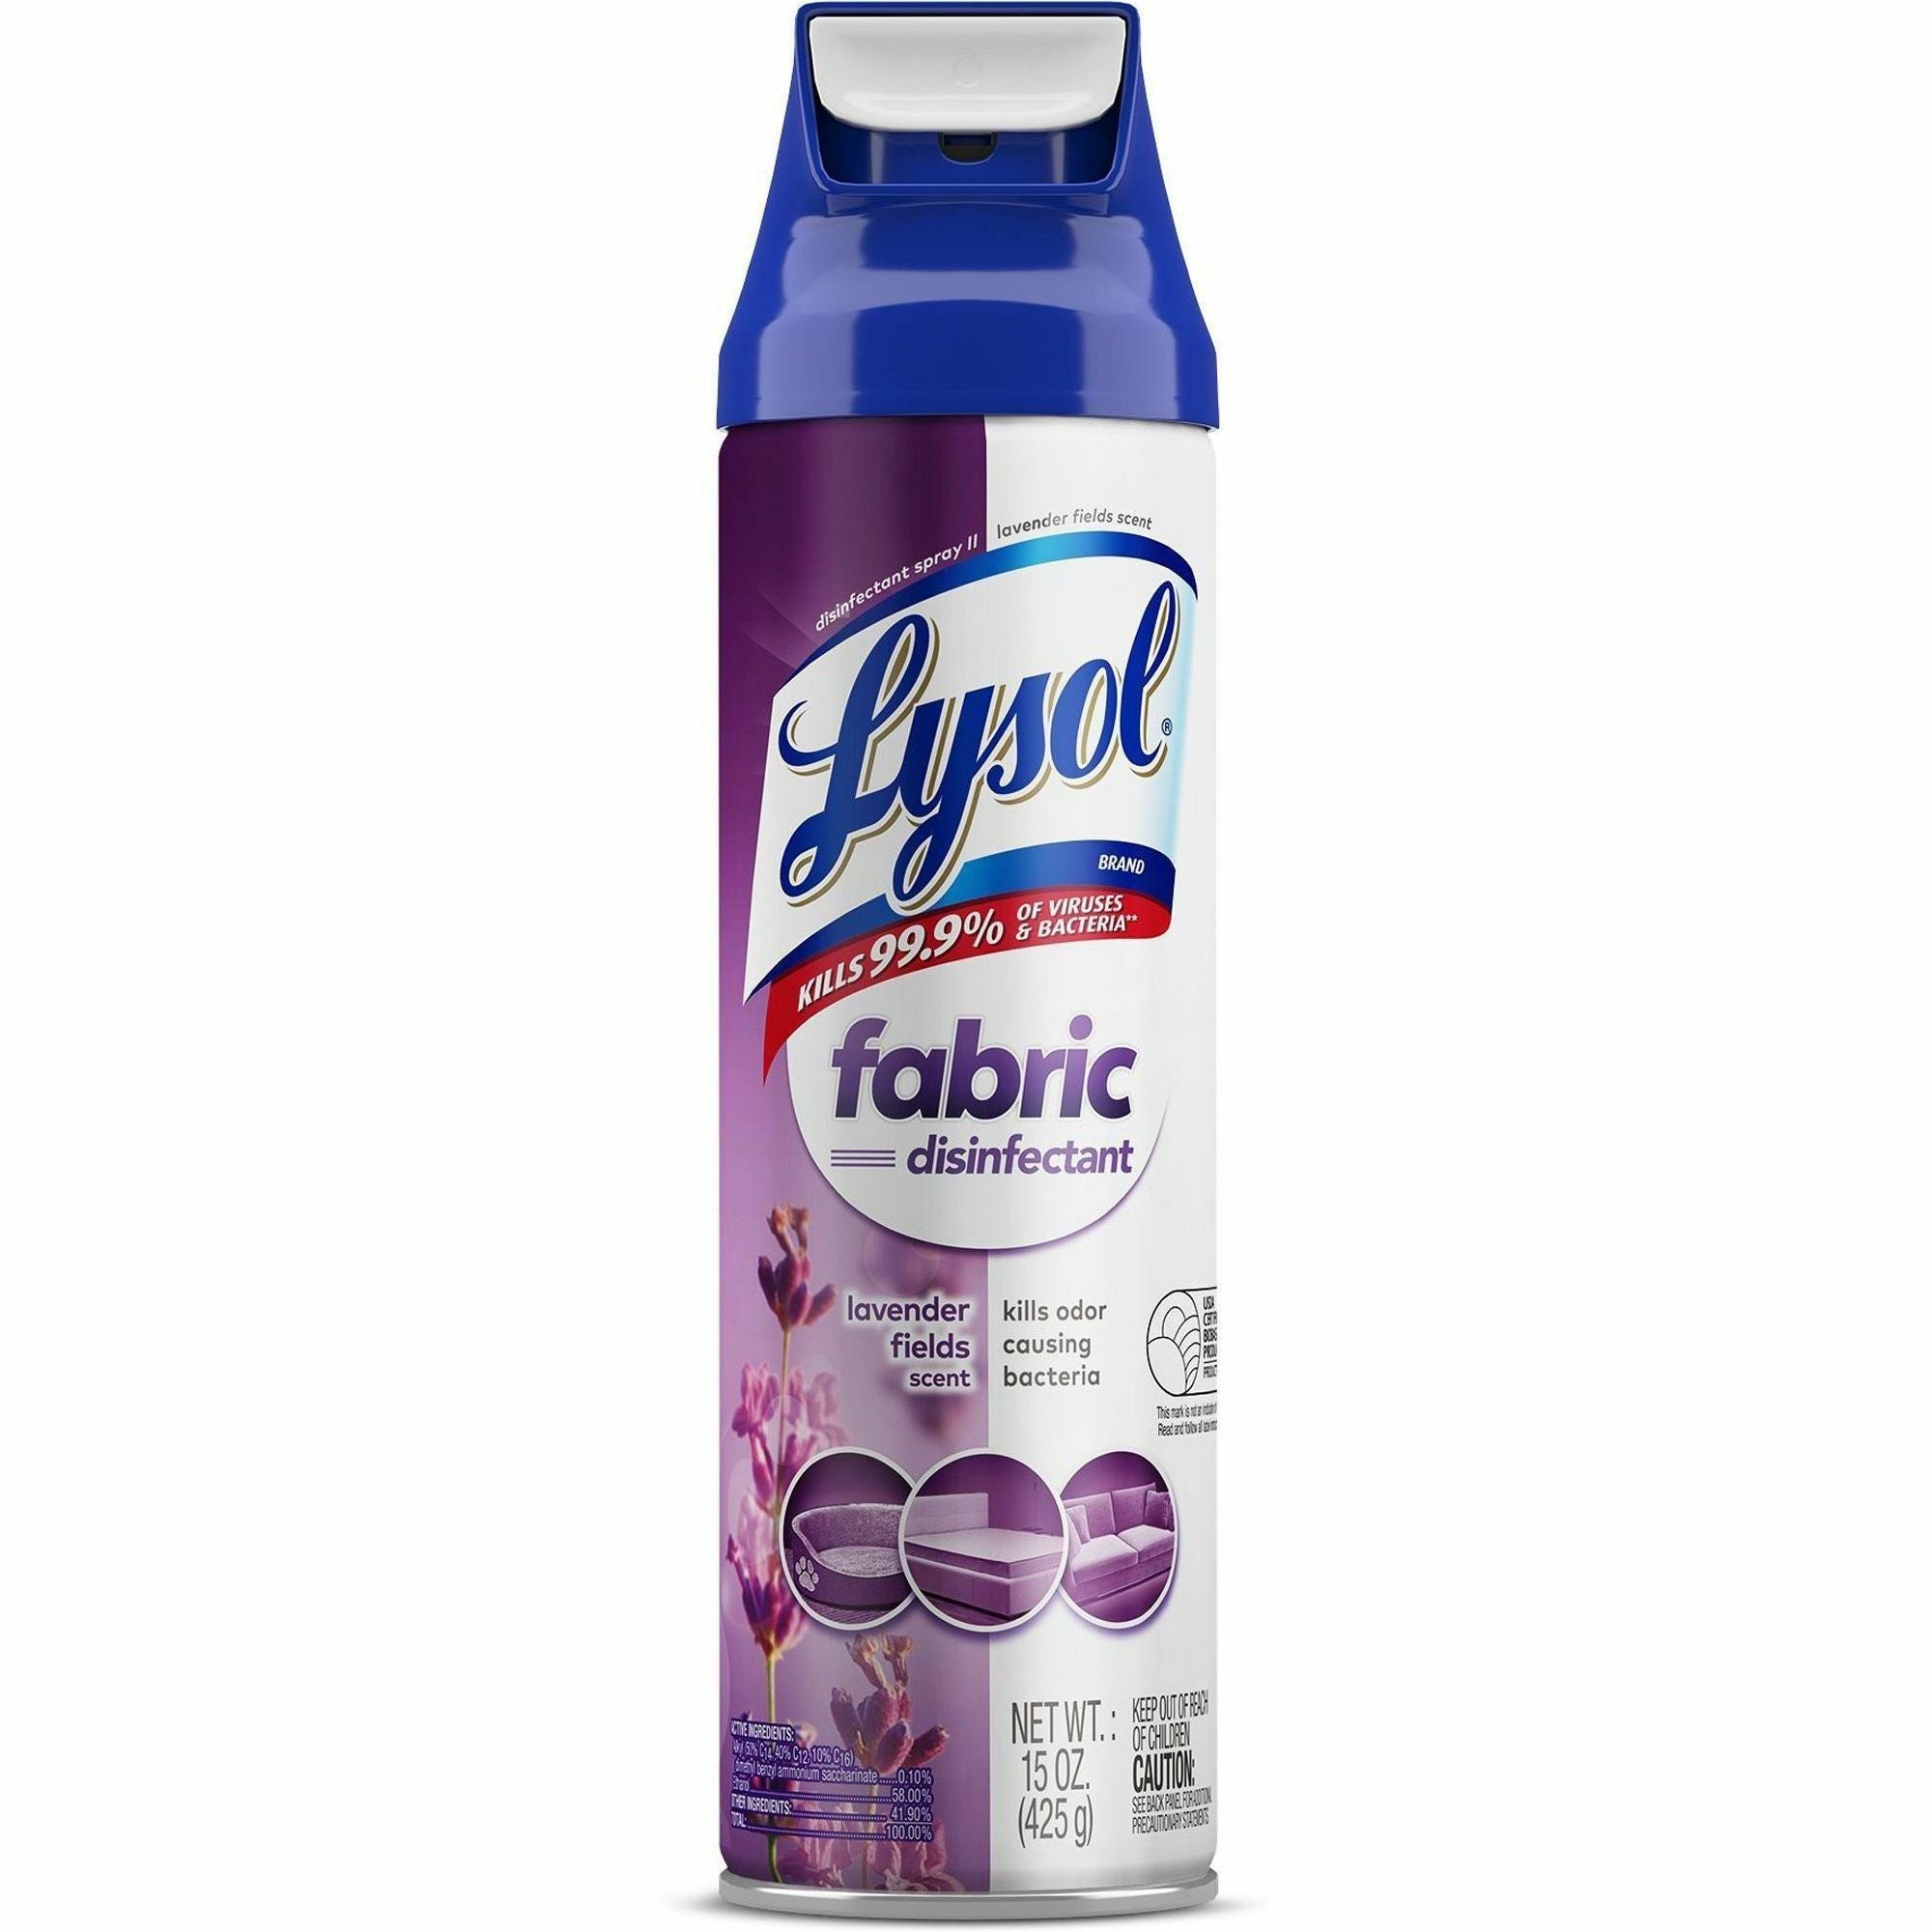 lysol-fabric-disinfectant-spray-15-fl-oz-05-quart-lavender-fields-scent-1-each-virucidal-soft-deodorize-clear_rac94121 - 1